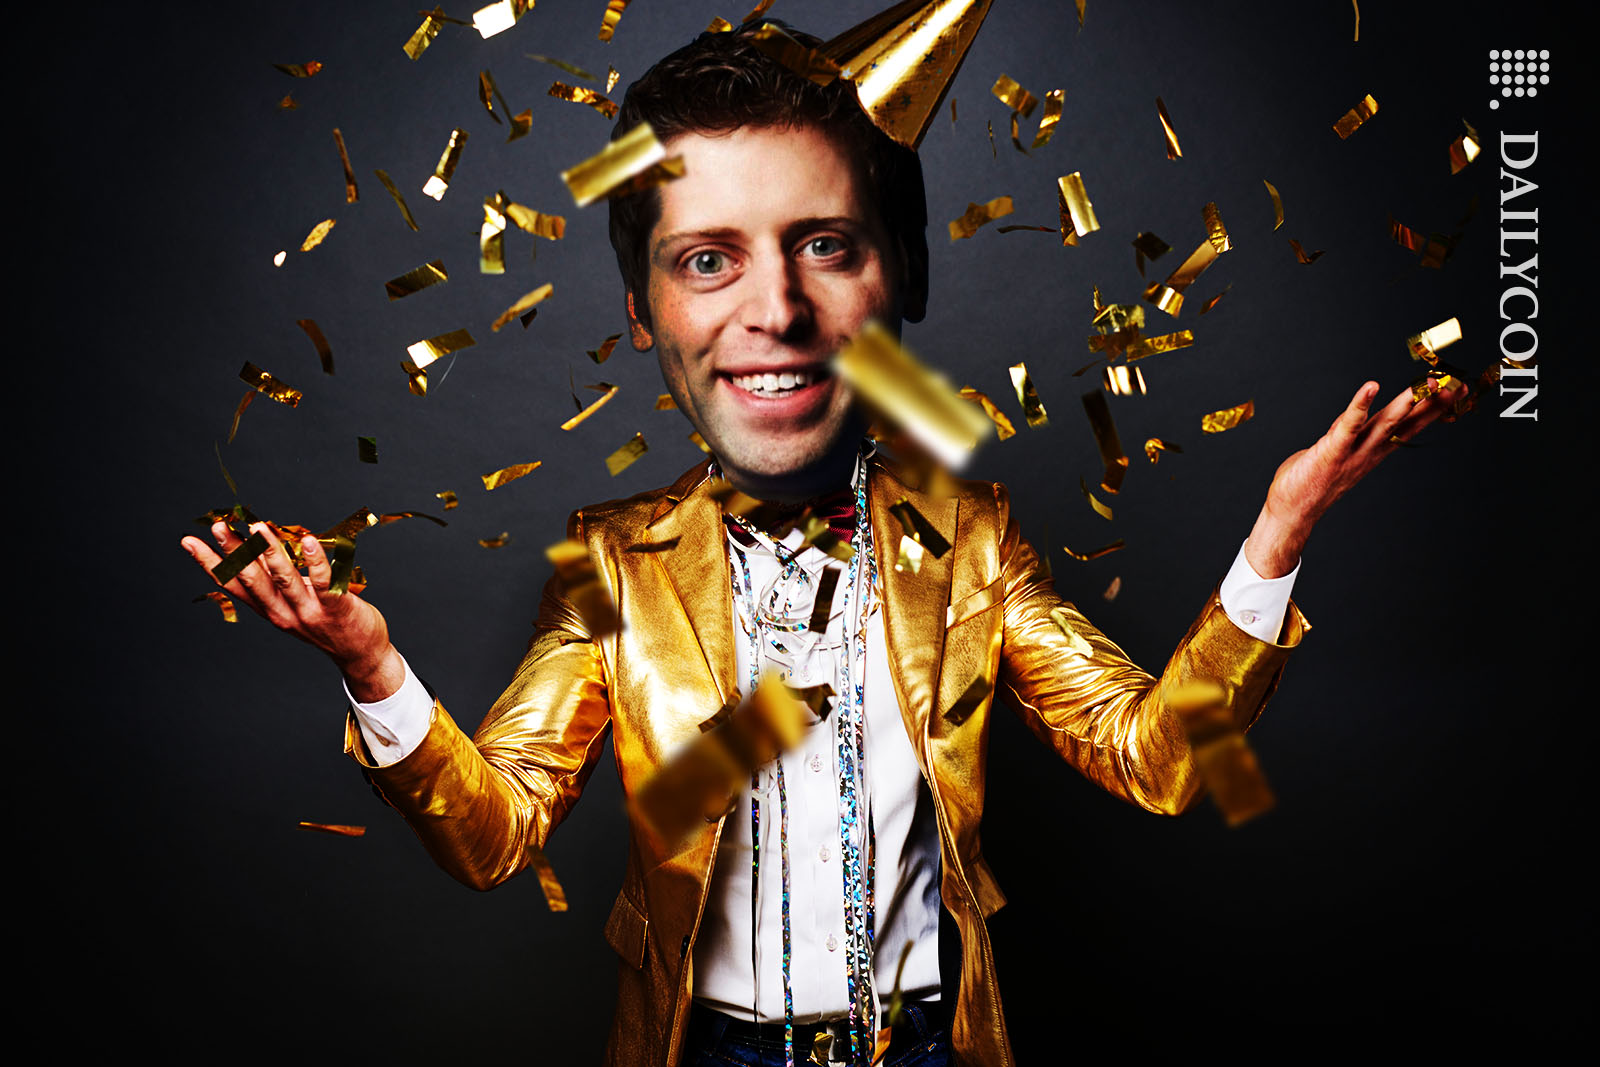 Samuel Altman looking slightly crazy, celebrating in a golden jacket throwing golden confetti around.